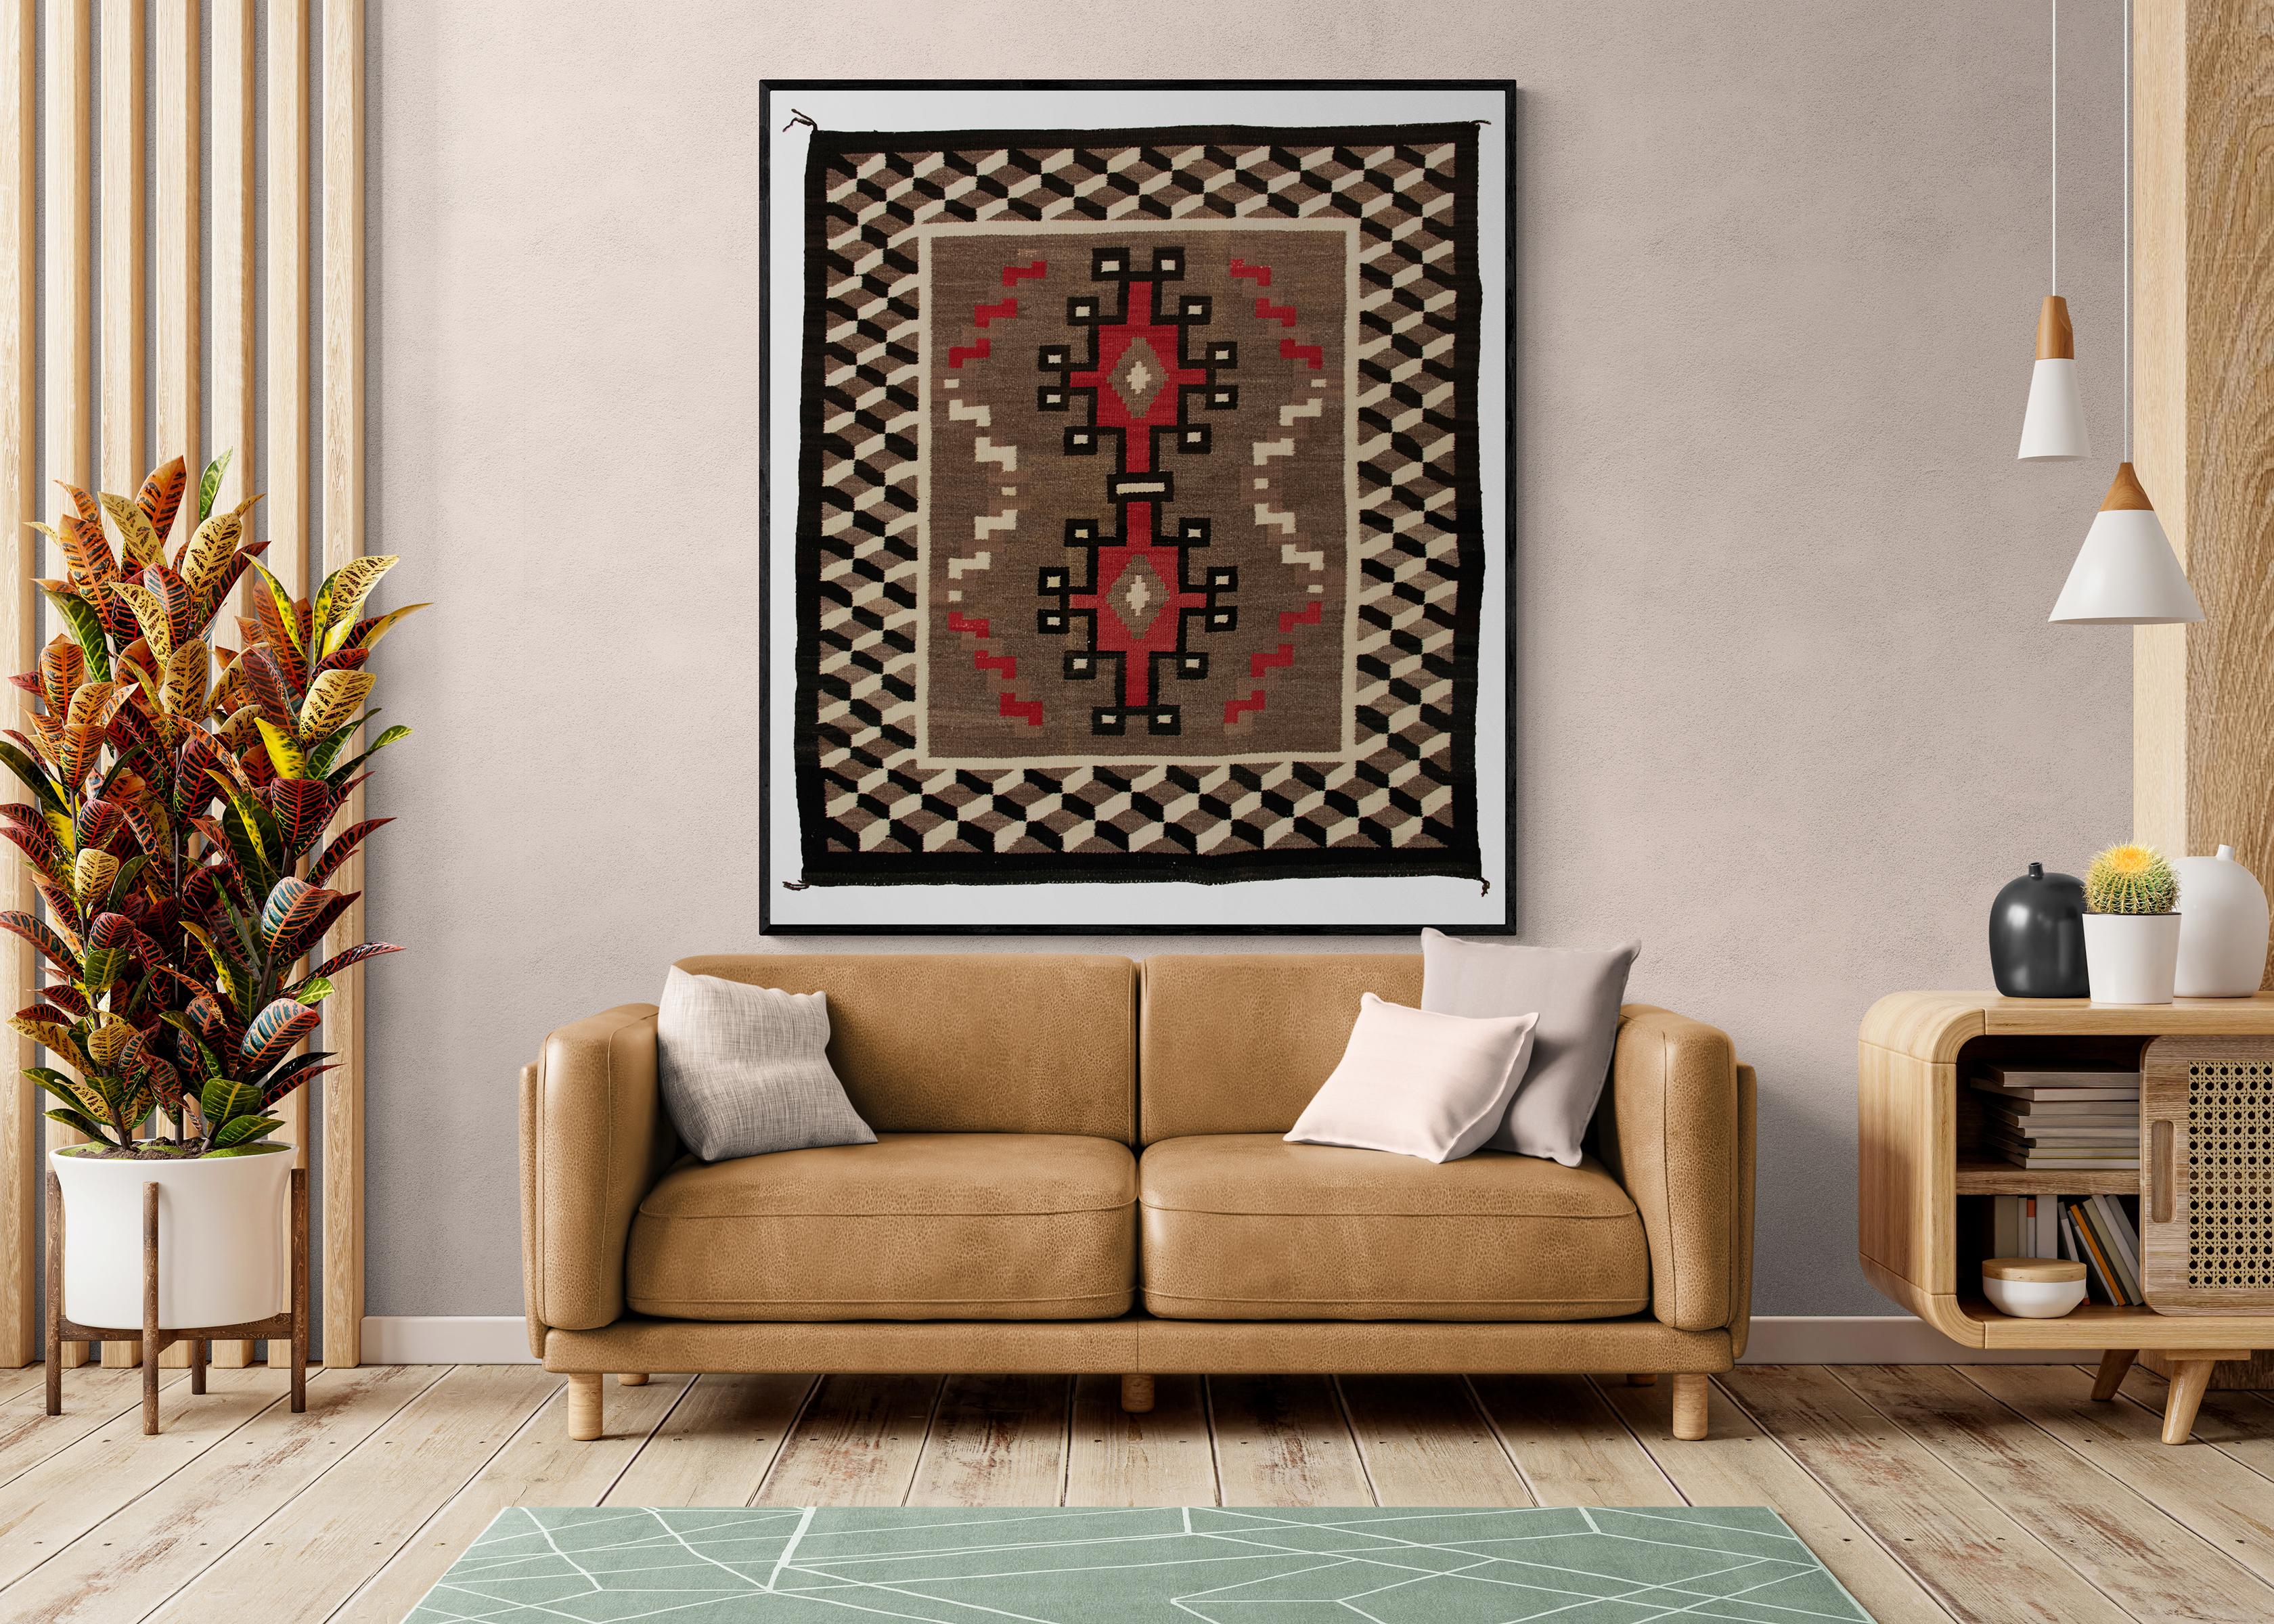 Dyed Vintage Navajo Area Rug, 1940s, Wool, Geometric Design in Brown Black Red White